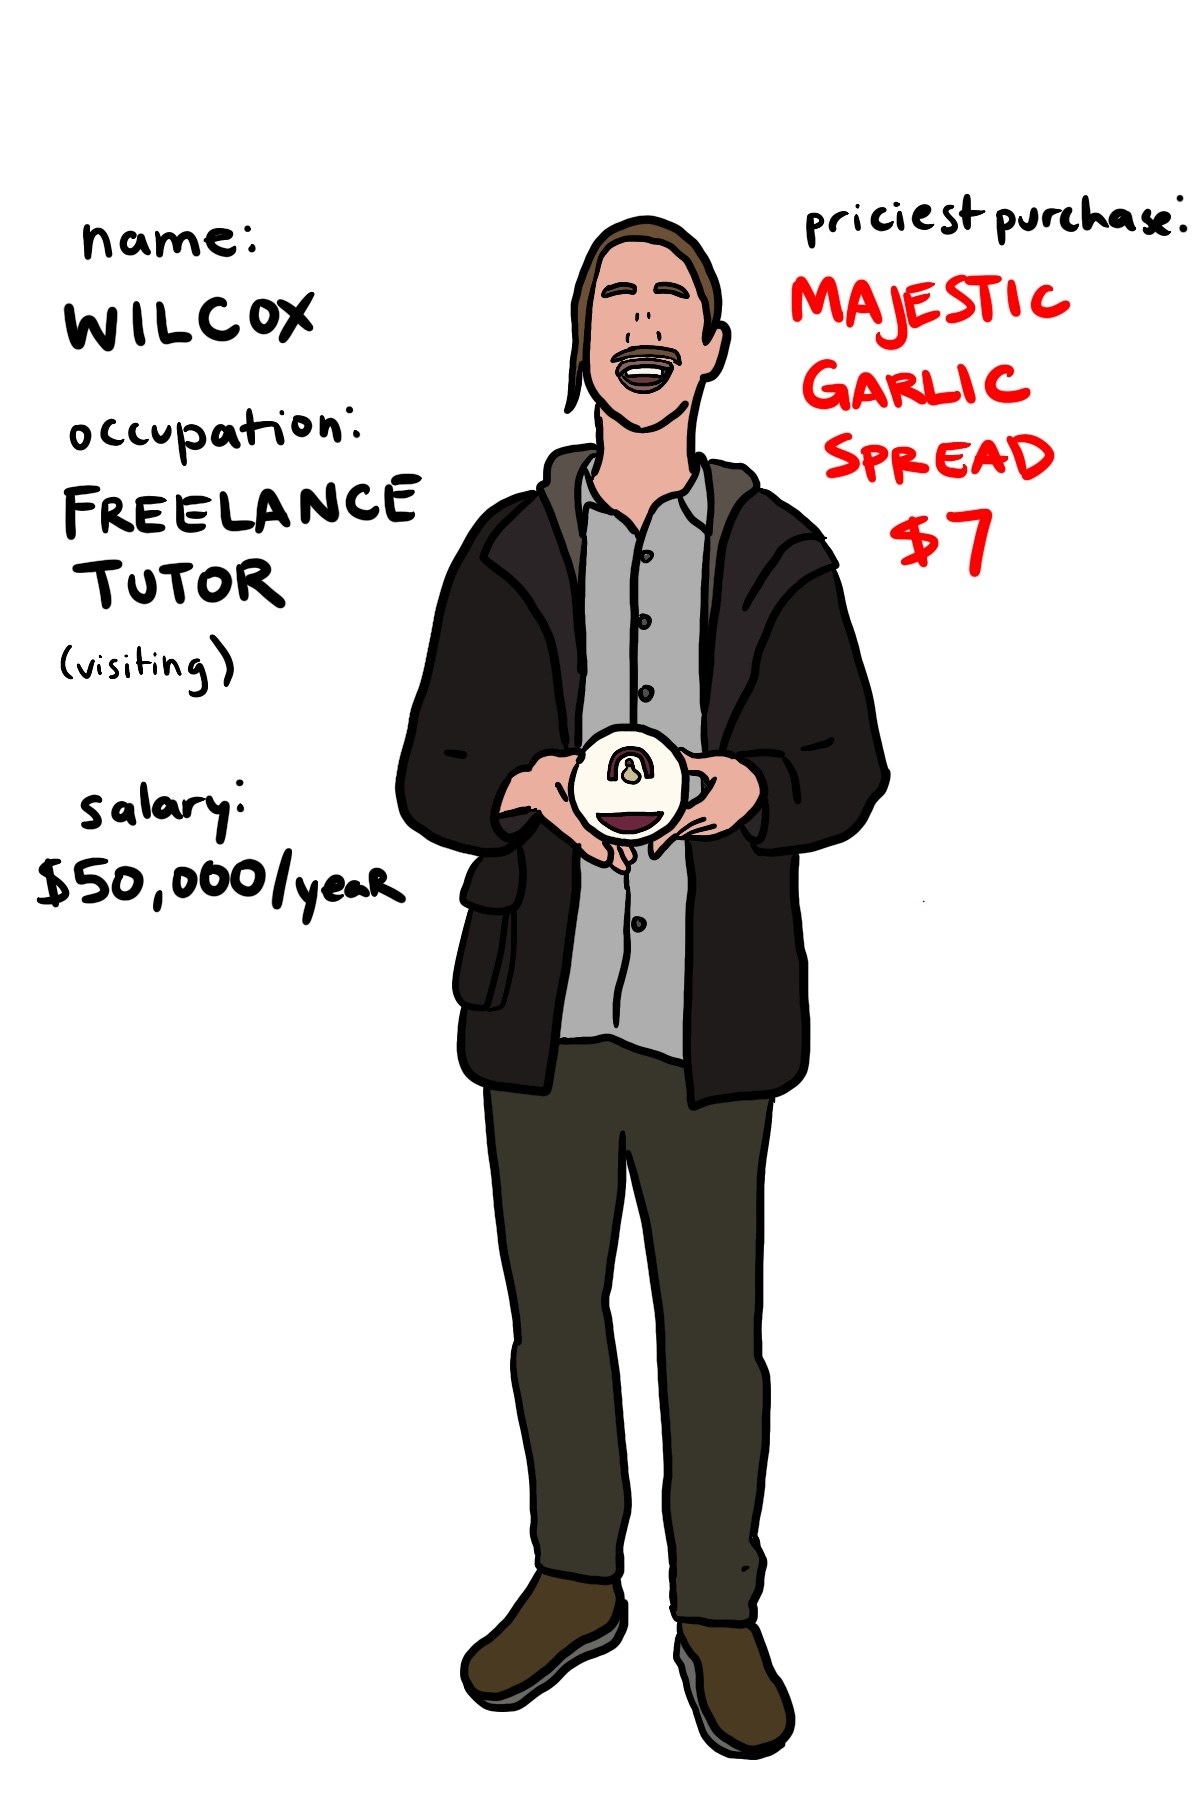 Customer showing off $7 garlic spread who earns $50k as a freelance tutor